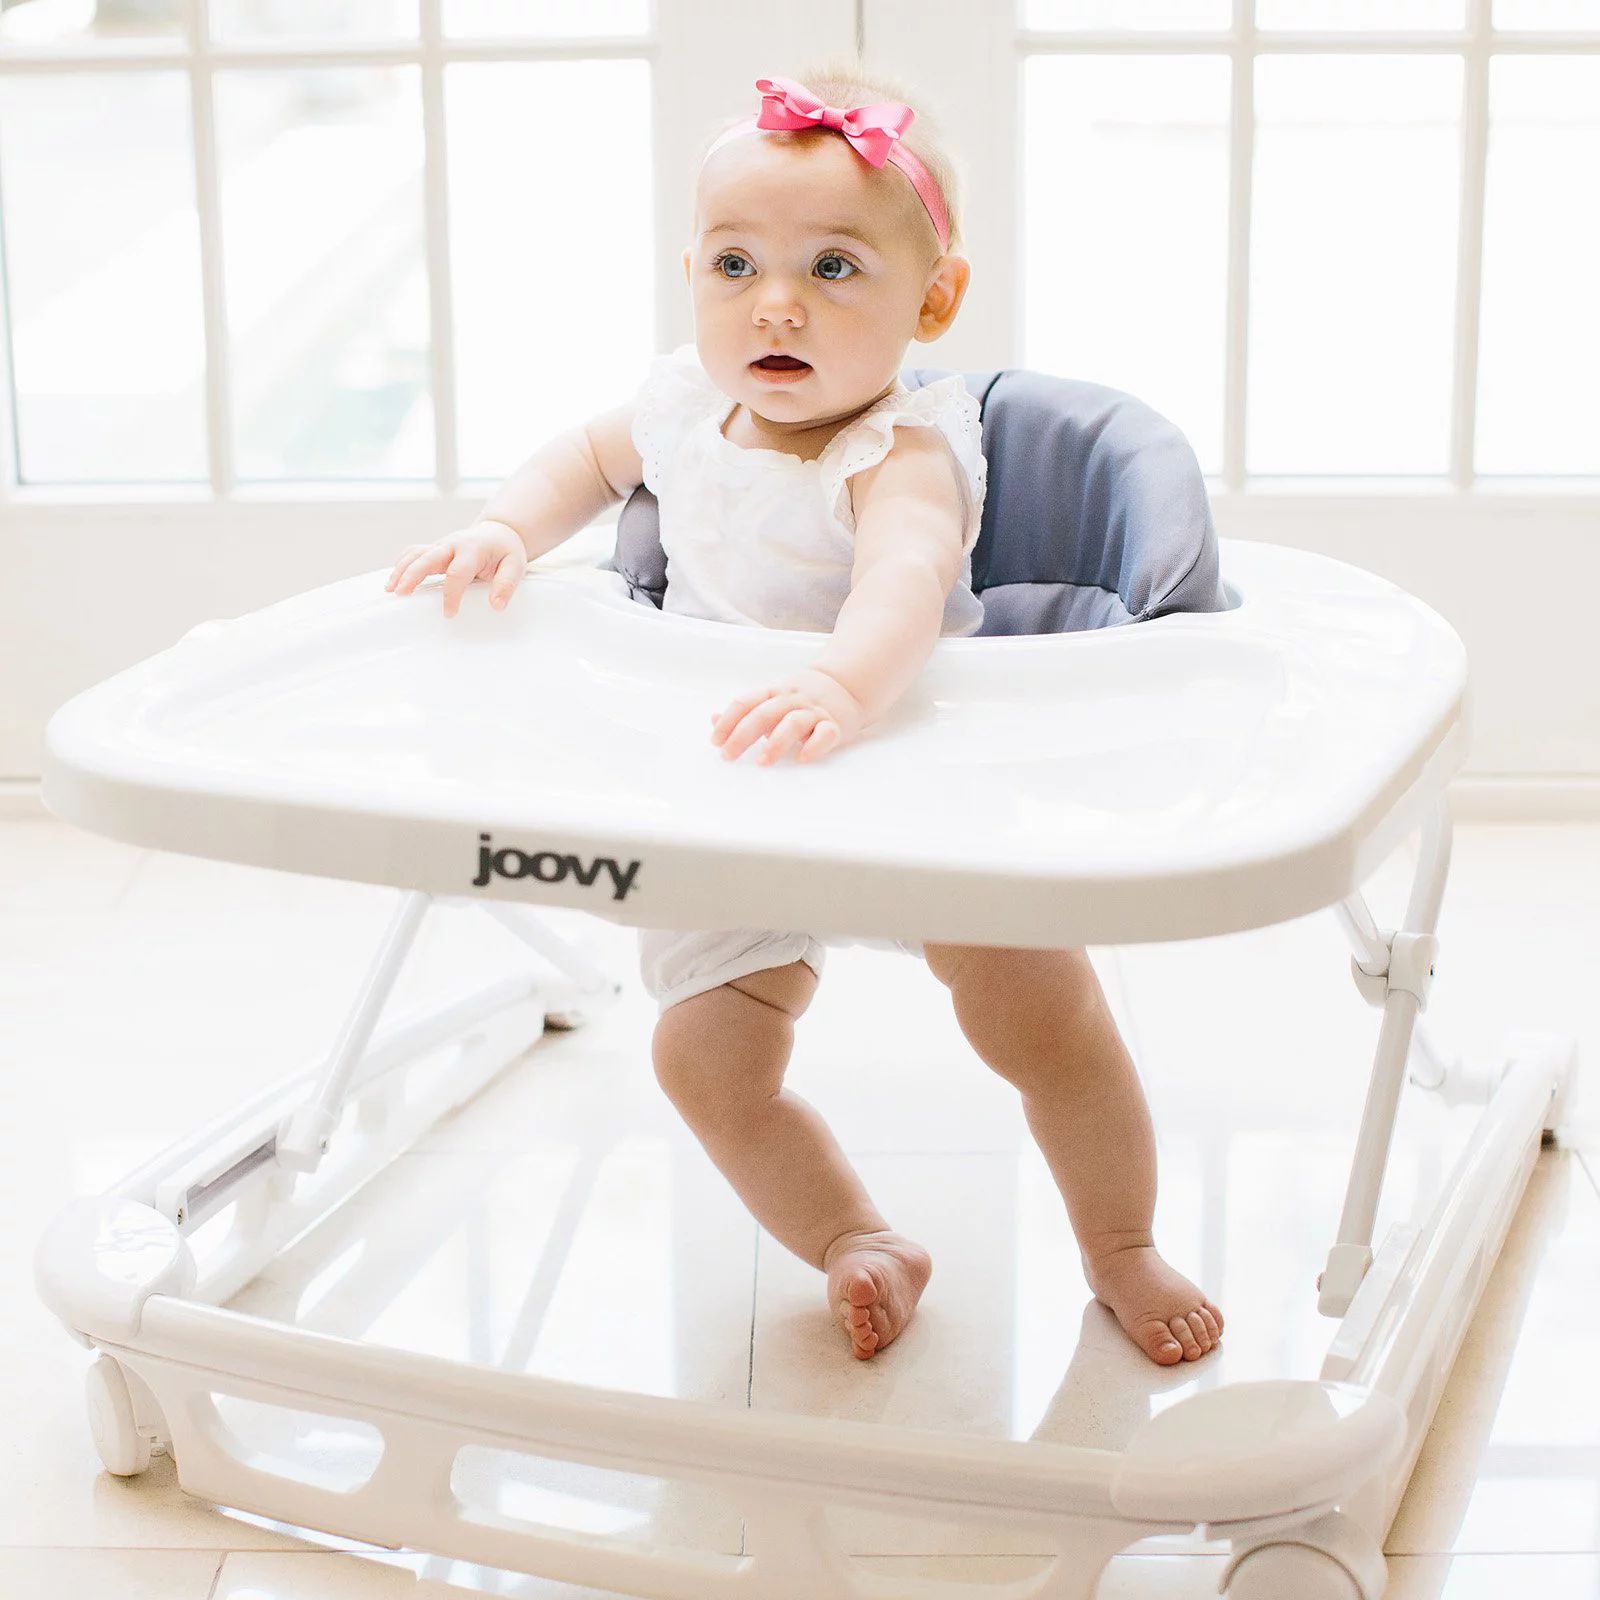 Joovy Spoon Baby Walker with Dishwasher Safe Tray Insert, Charcoal | Walmart (US)